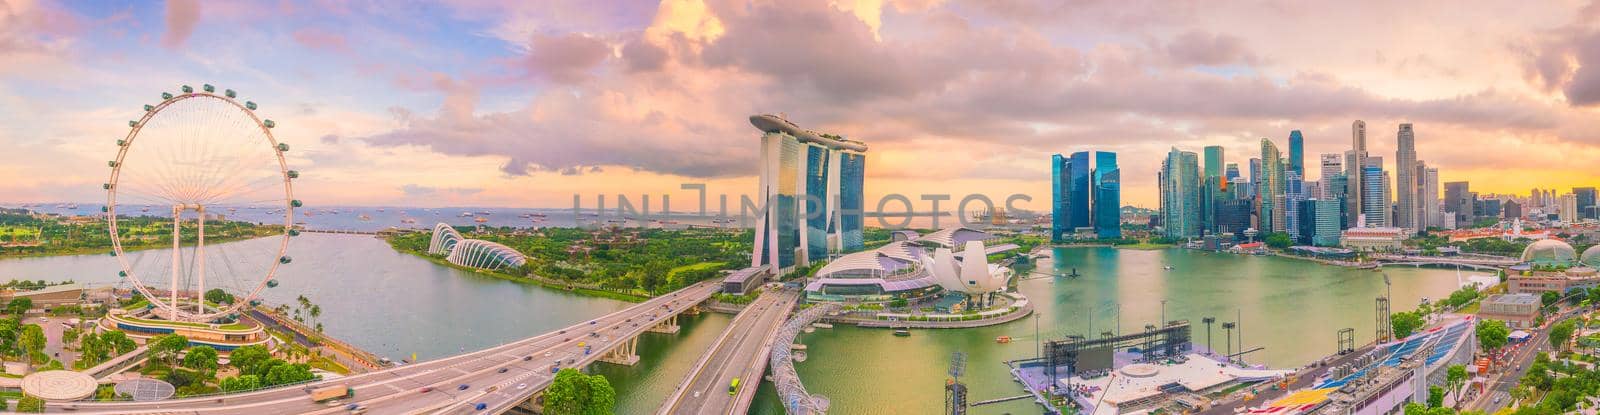 Singapore downtown skyline by f11photo